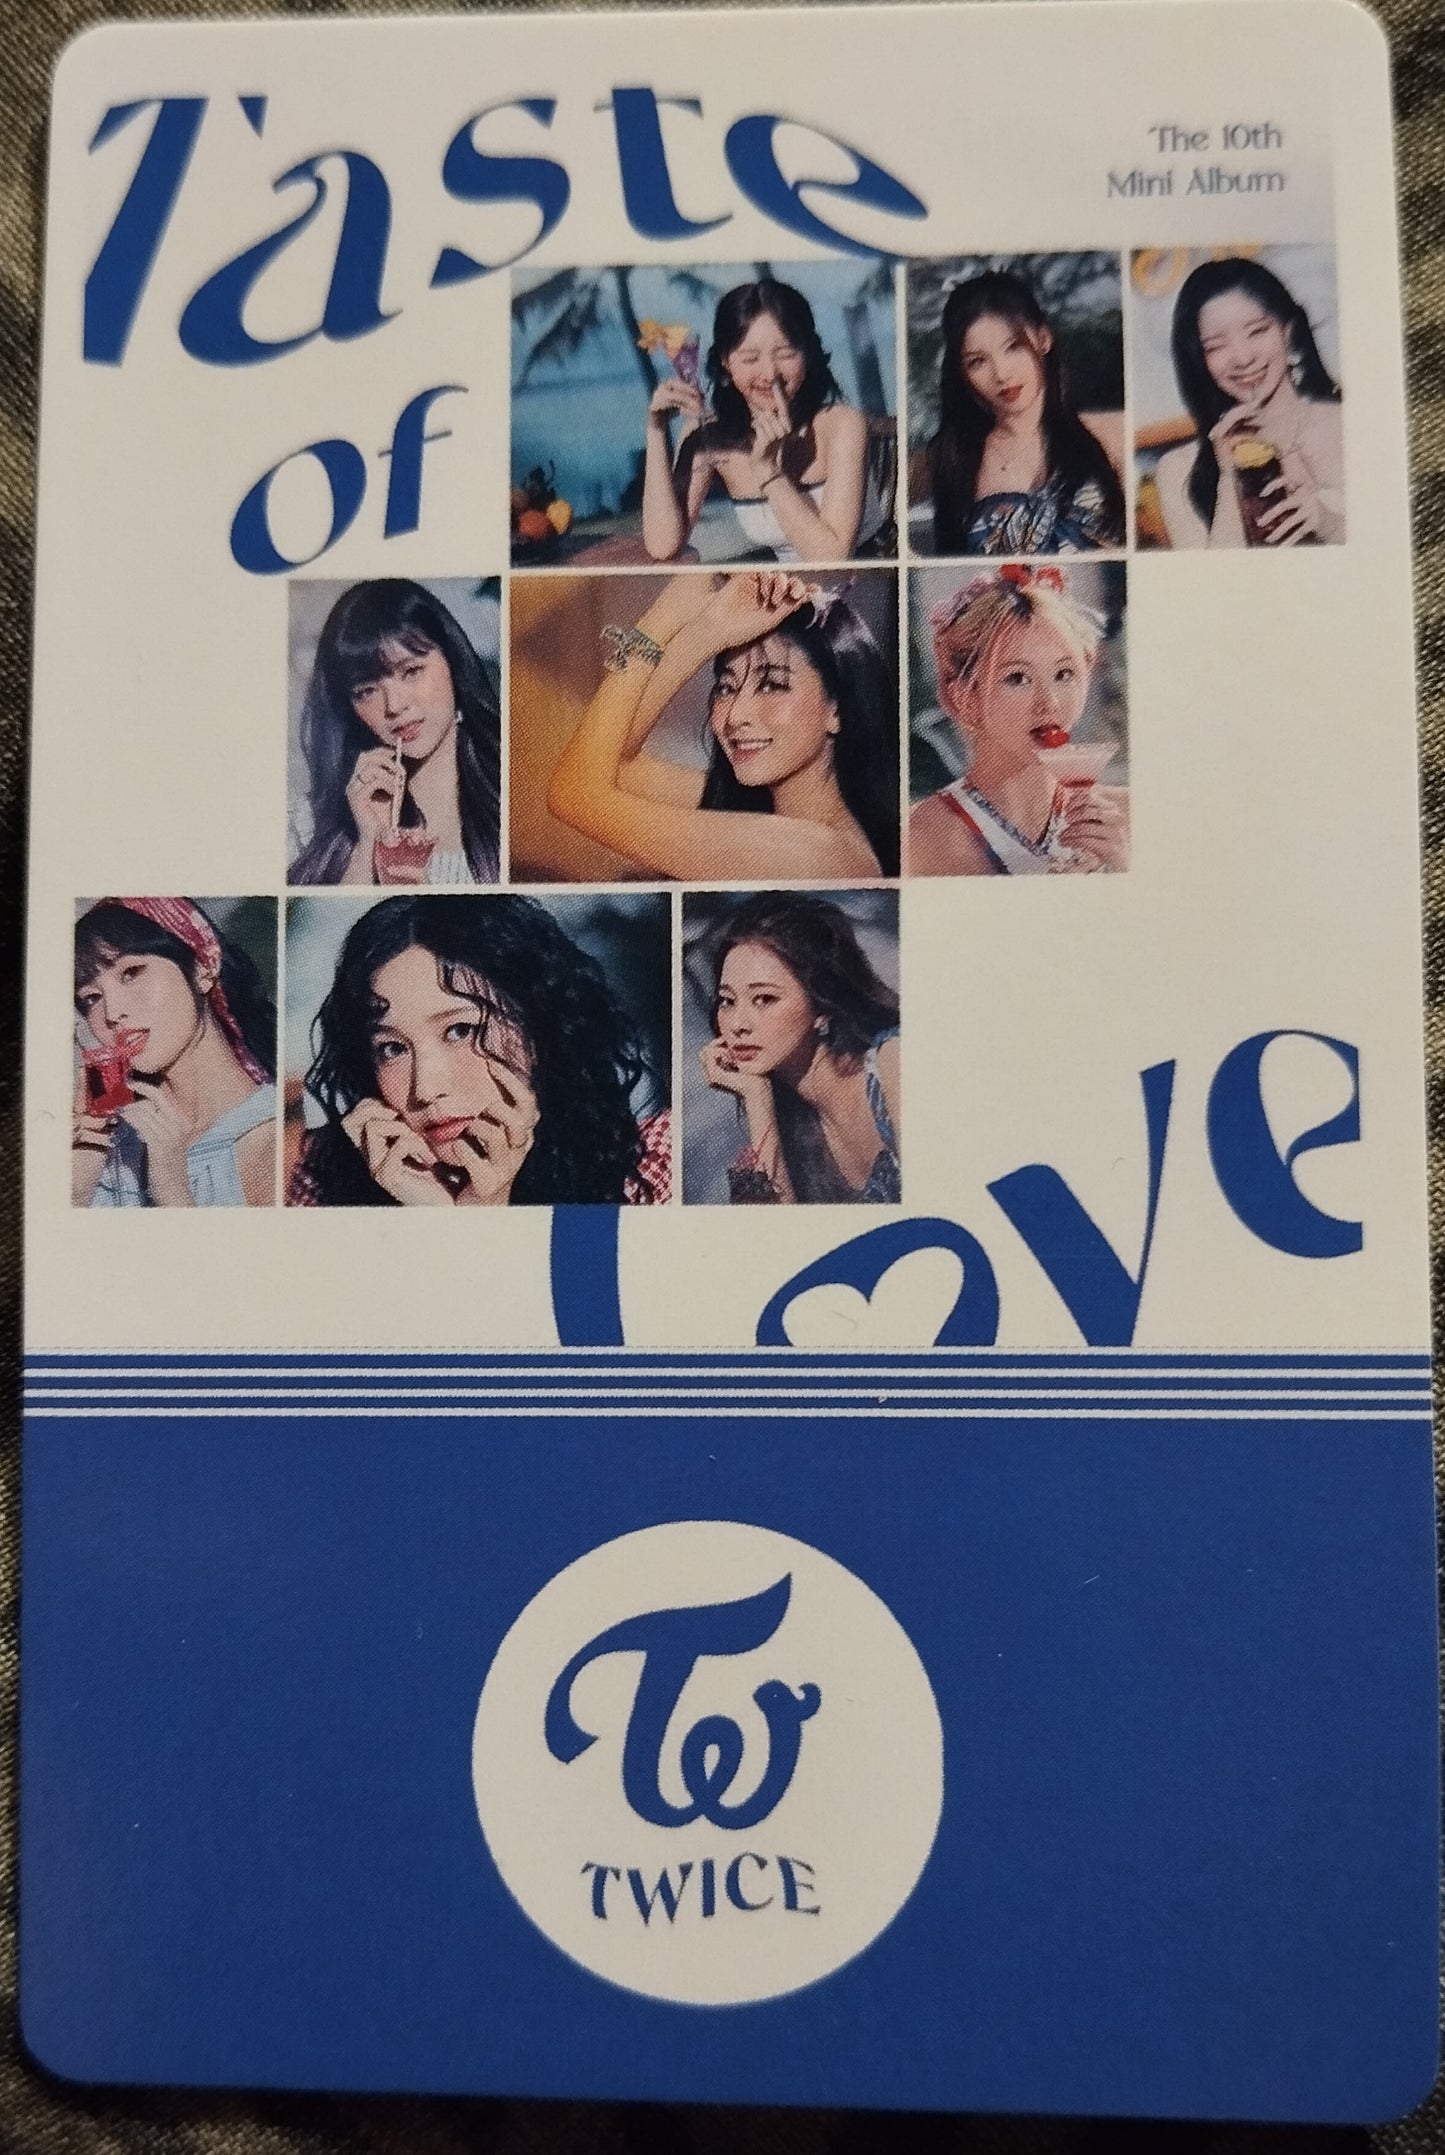 Photocard  TWICE  Taste of love  The 10th mini album  Tzuyu